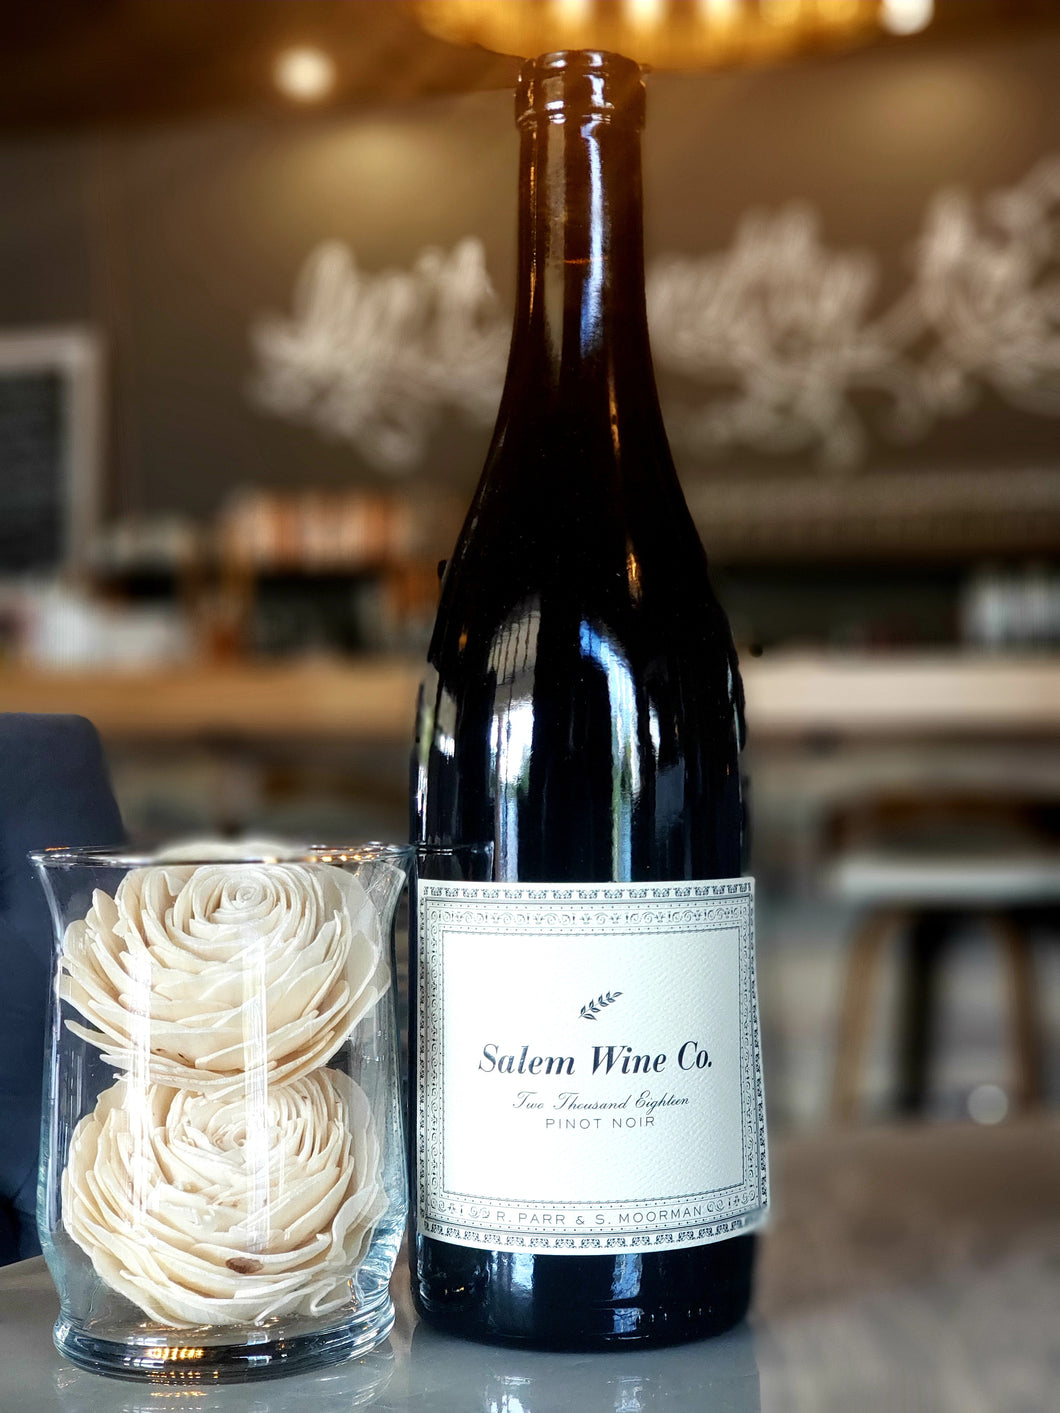 Salem Wine Co. Pinot Noir, 2018